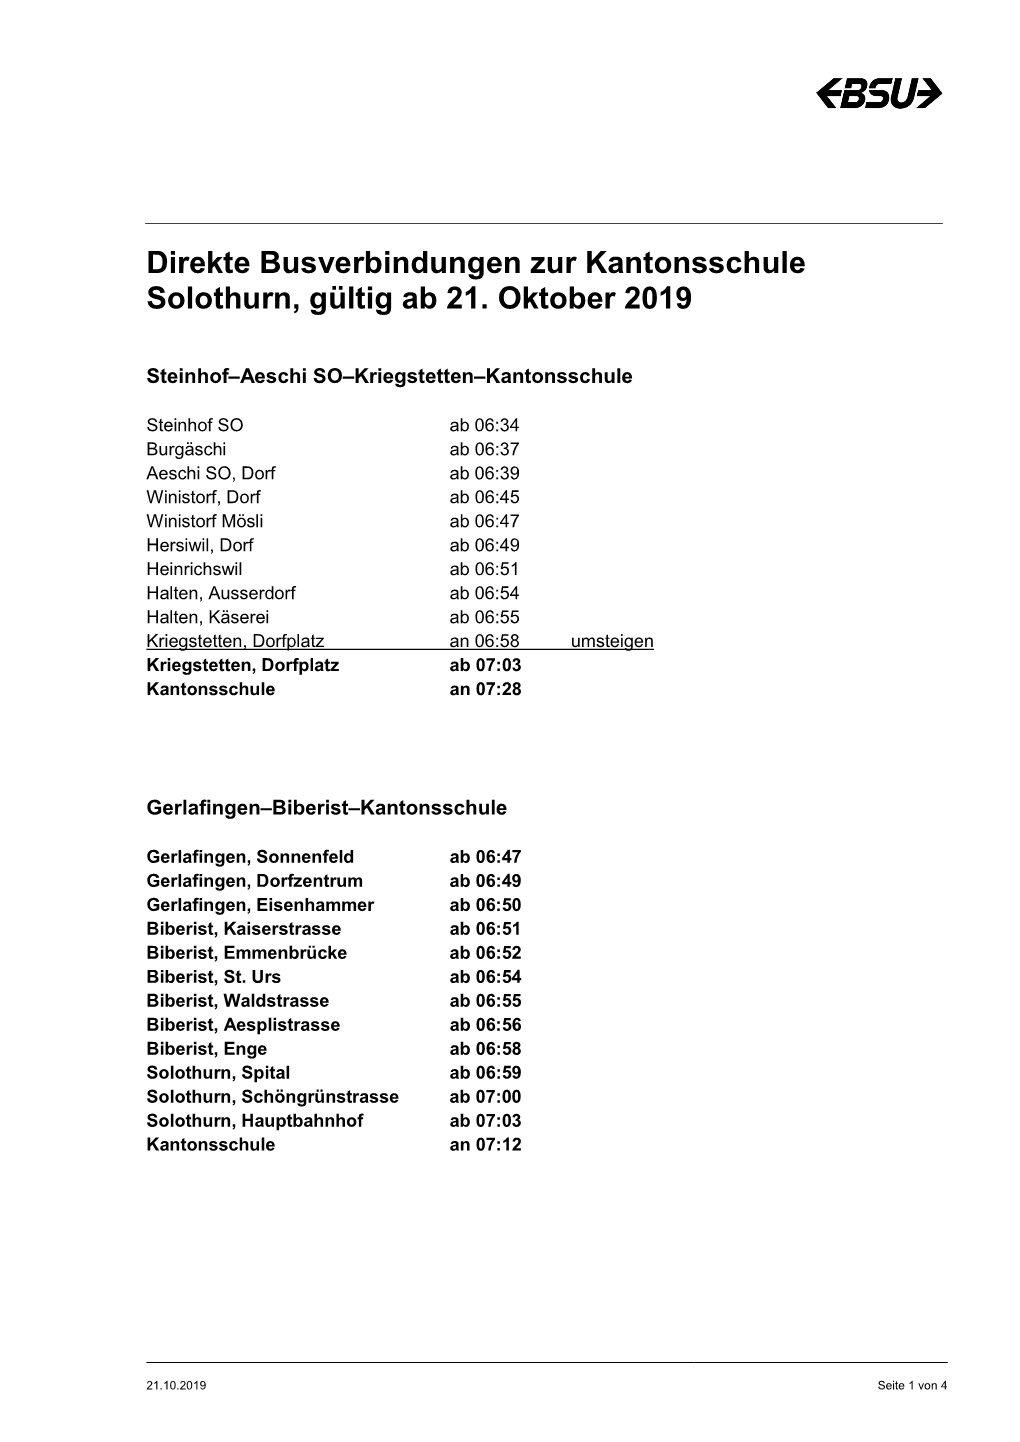 Direkte Busverbindungen Zur Kantonsschule Solothurn, Gültig Ab 21. Oktober 2019